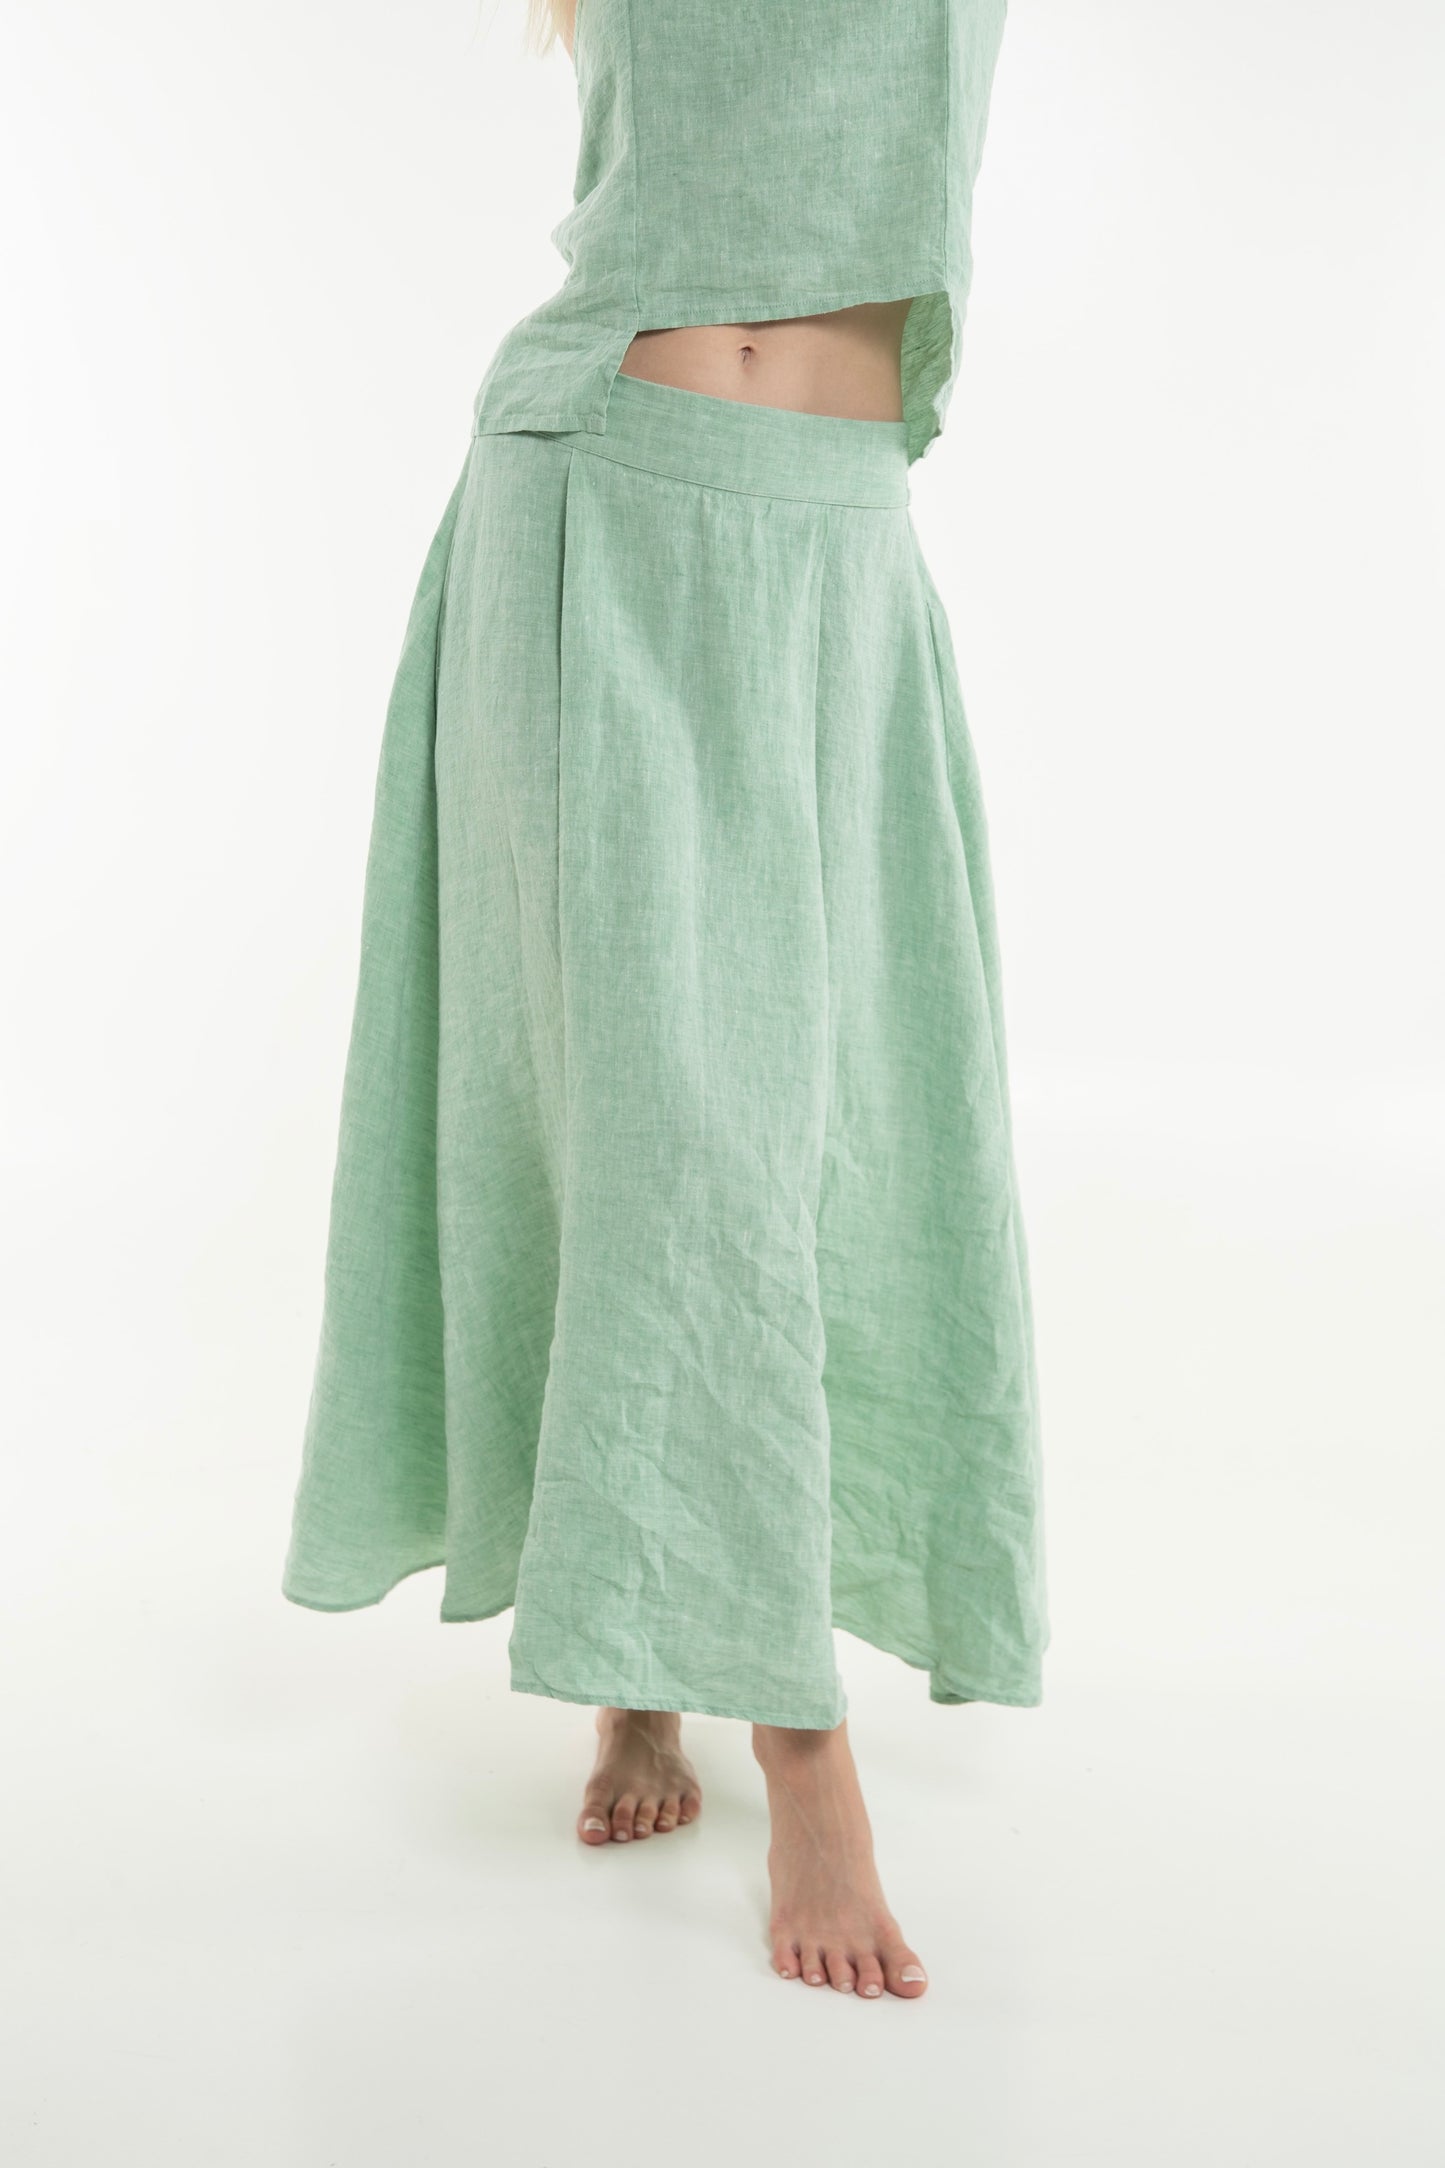 Atsui Woman Skirt Absinth Green - Unisex